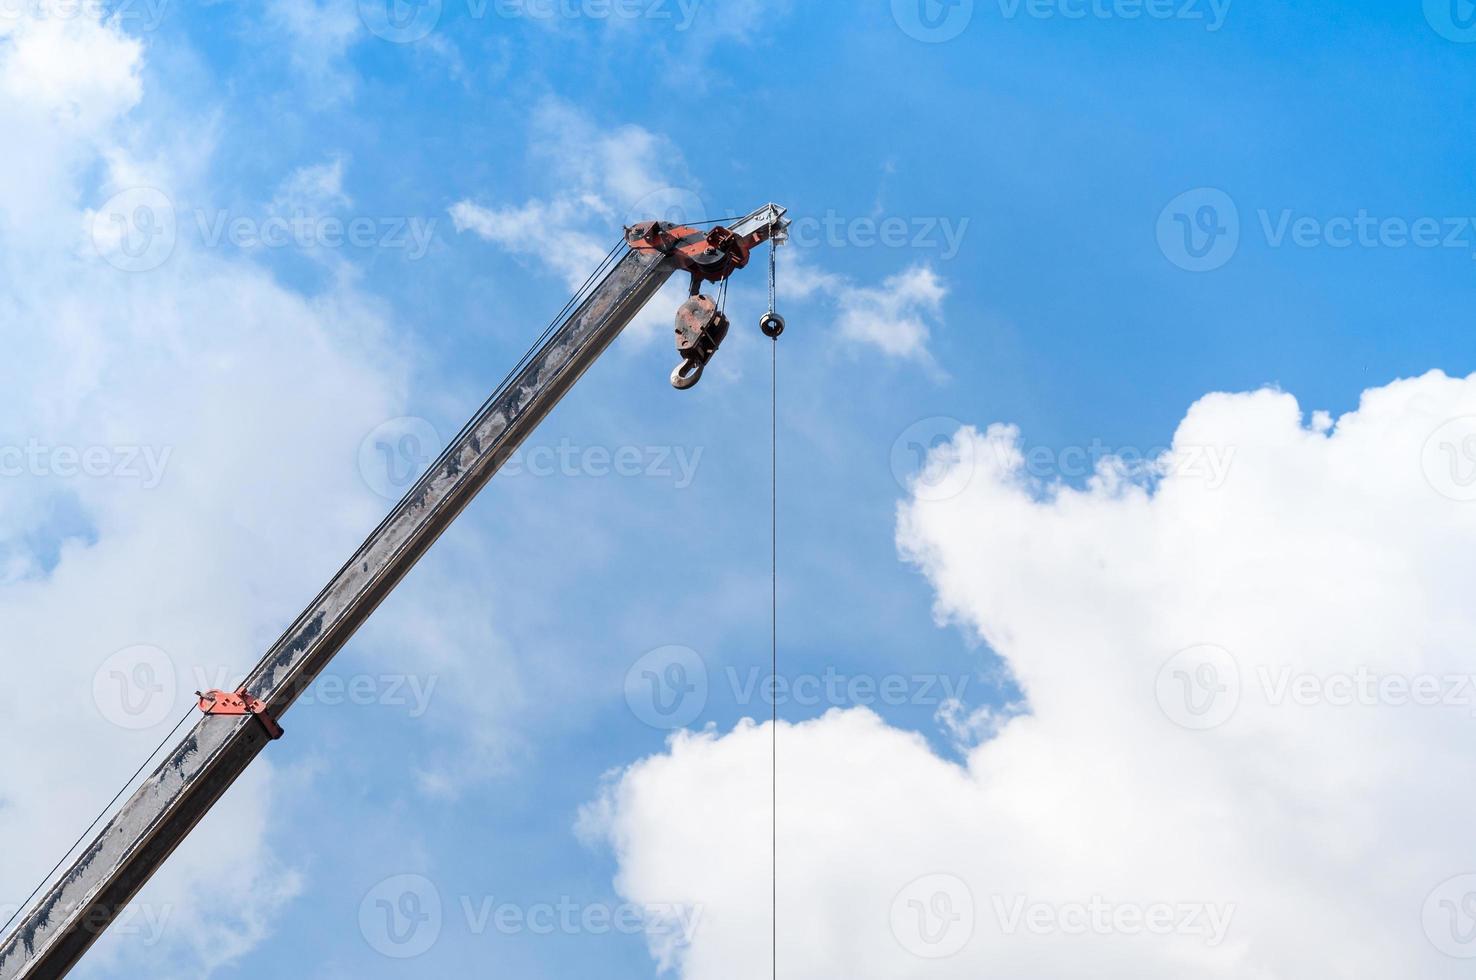 móvil grua auge con gancho colgando por cable cable antecedentes azul cielo, cerca arriba foto